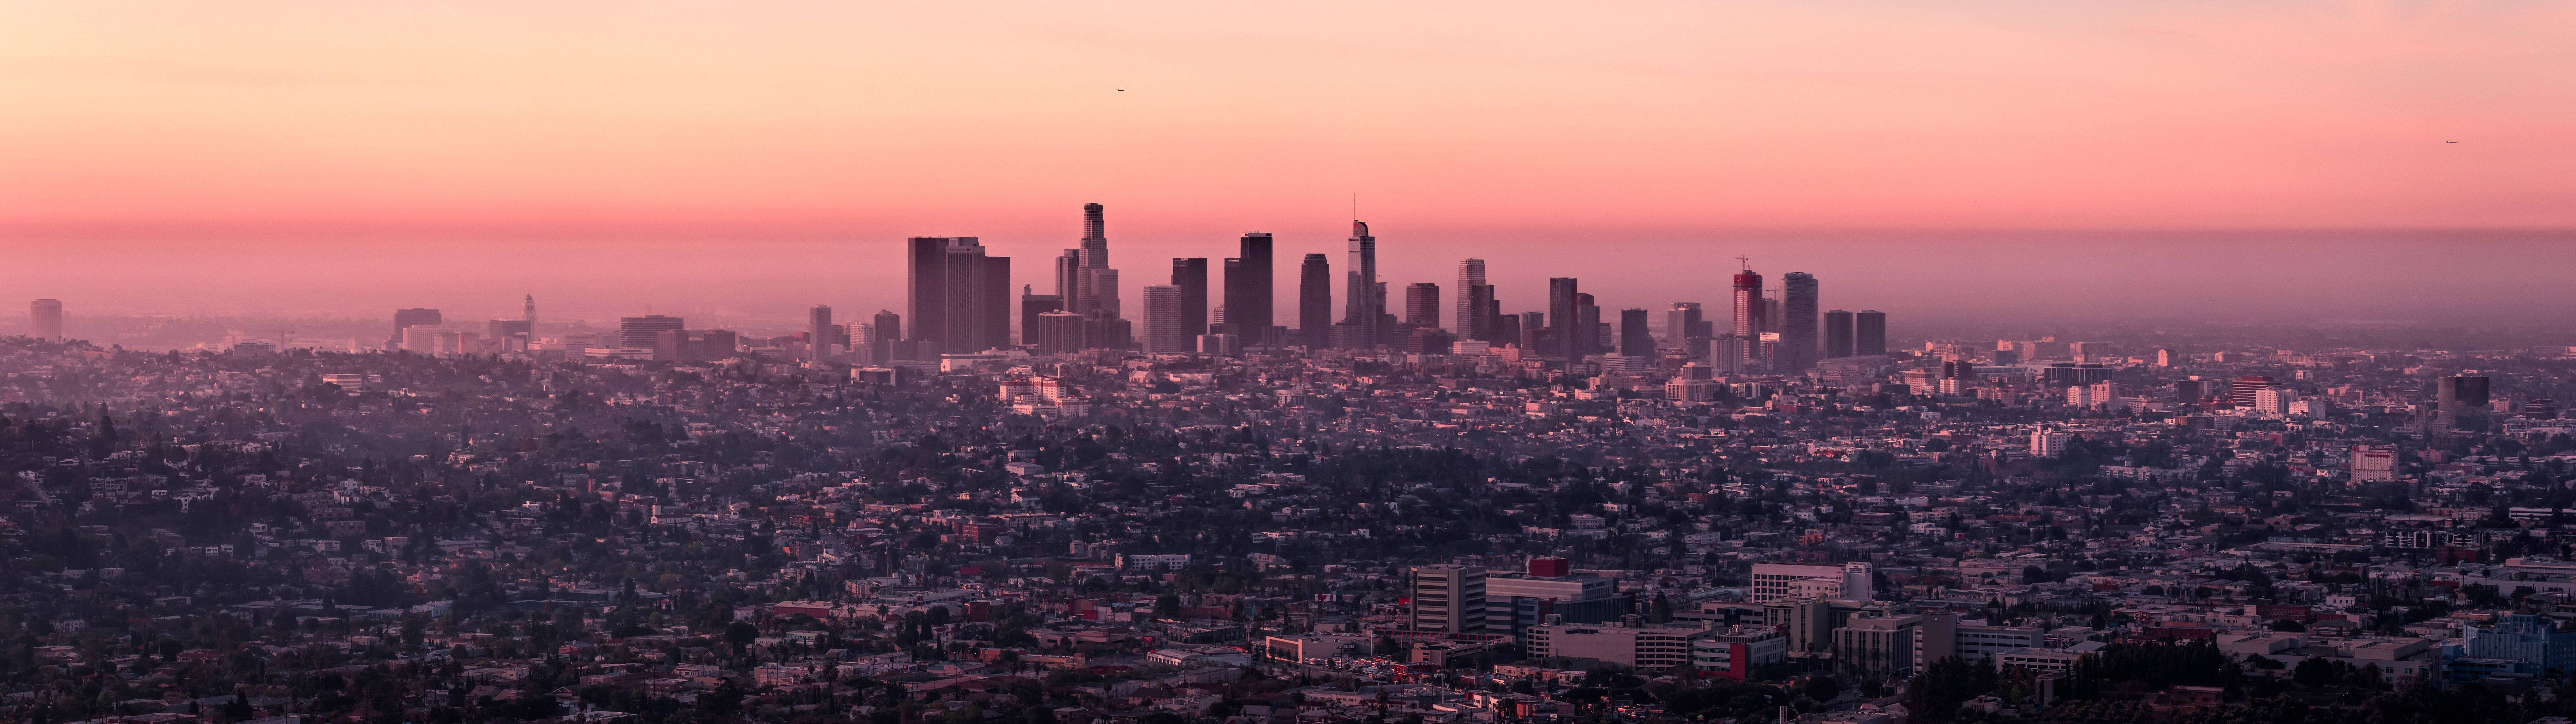 Panoramavon Los Angeles 4k Wallpaper